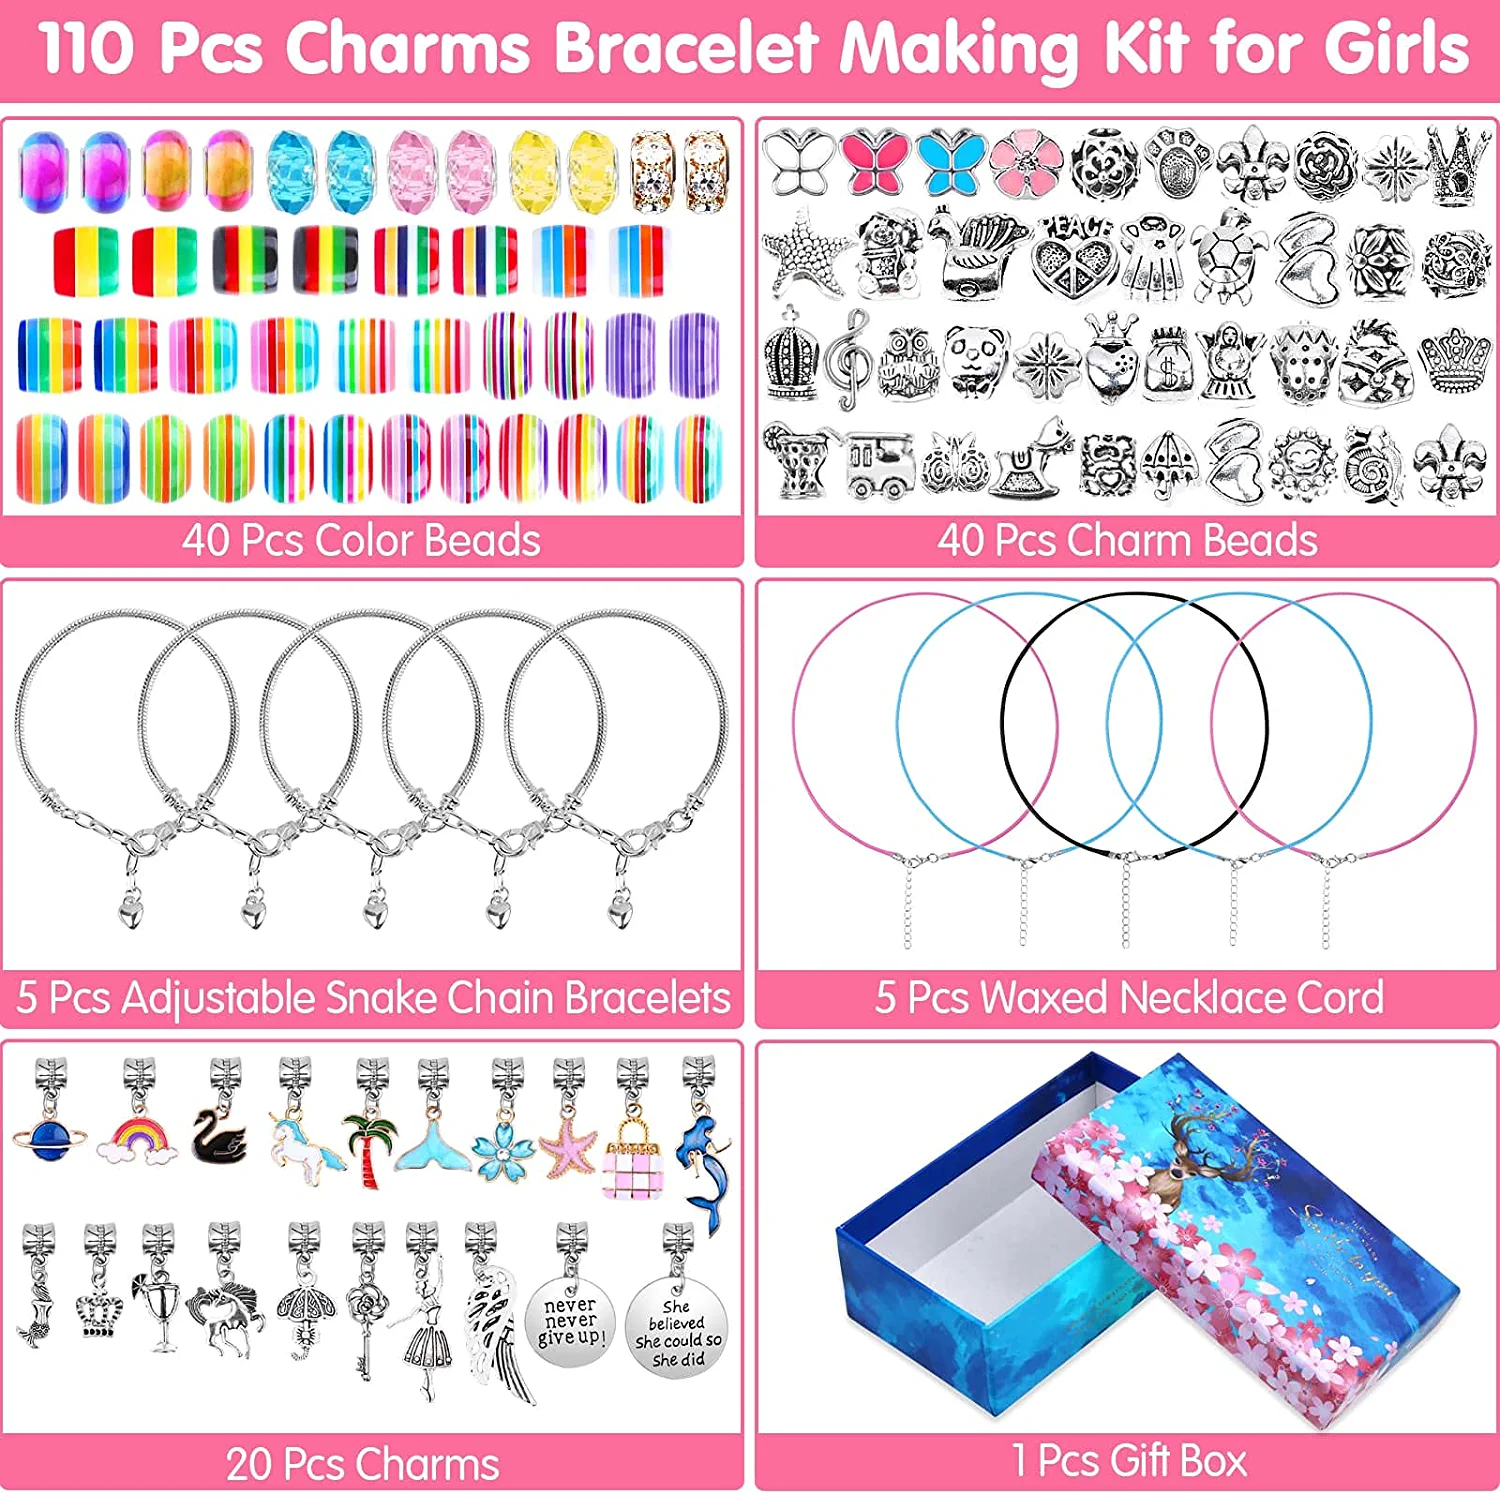 Girls Bracelet Making Kit, 112 Pcs Charm Bracelets Making Kit for Girls, Charm Beads Bracelet Jewelry Kit,Jewelry Charms, DIY Bracelets, Teen Girls Jewelry Christmas Gift - image 3 of 7